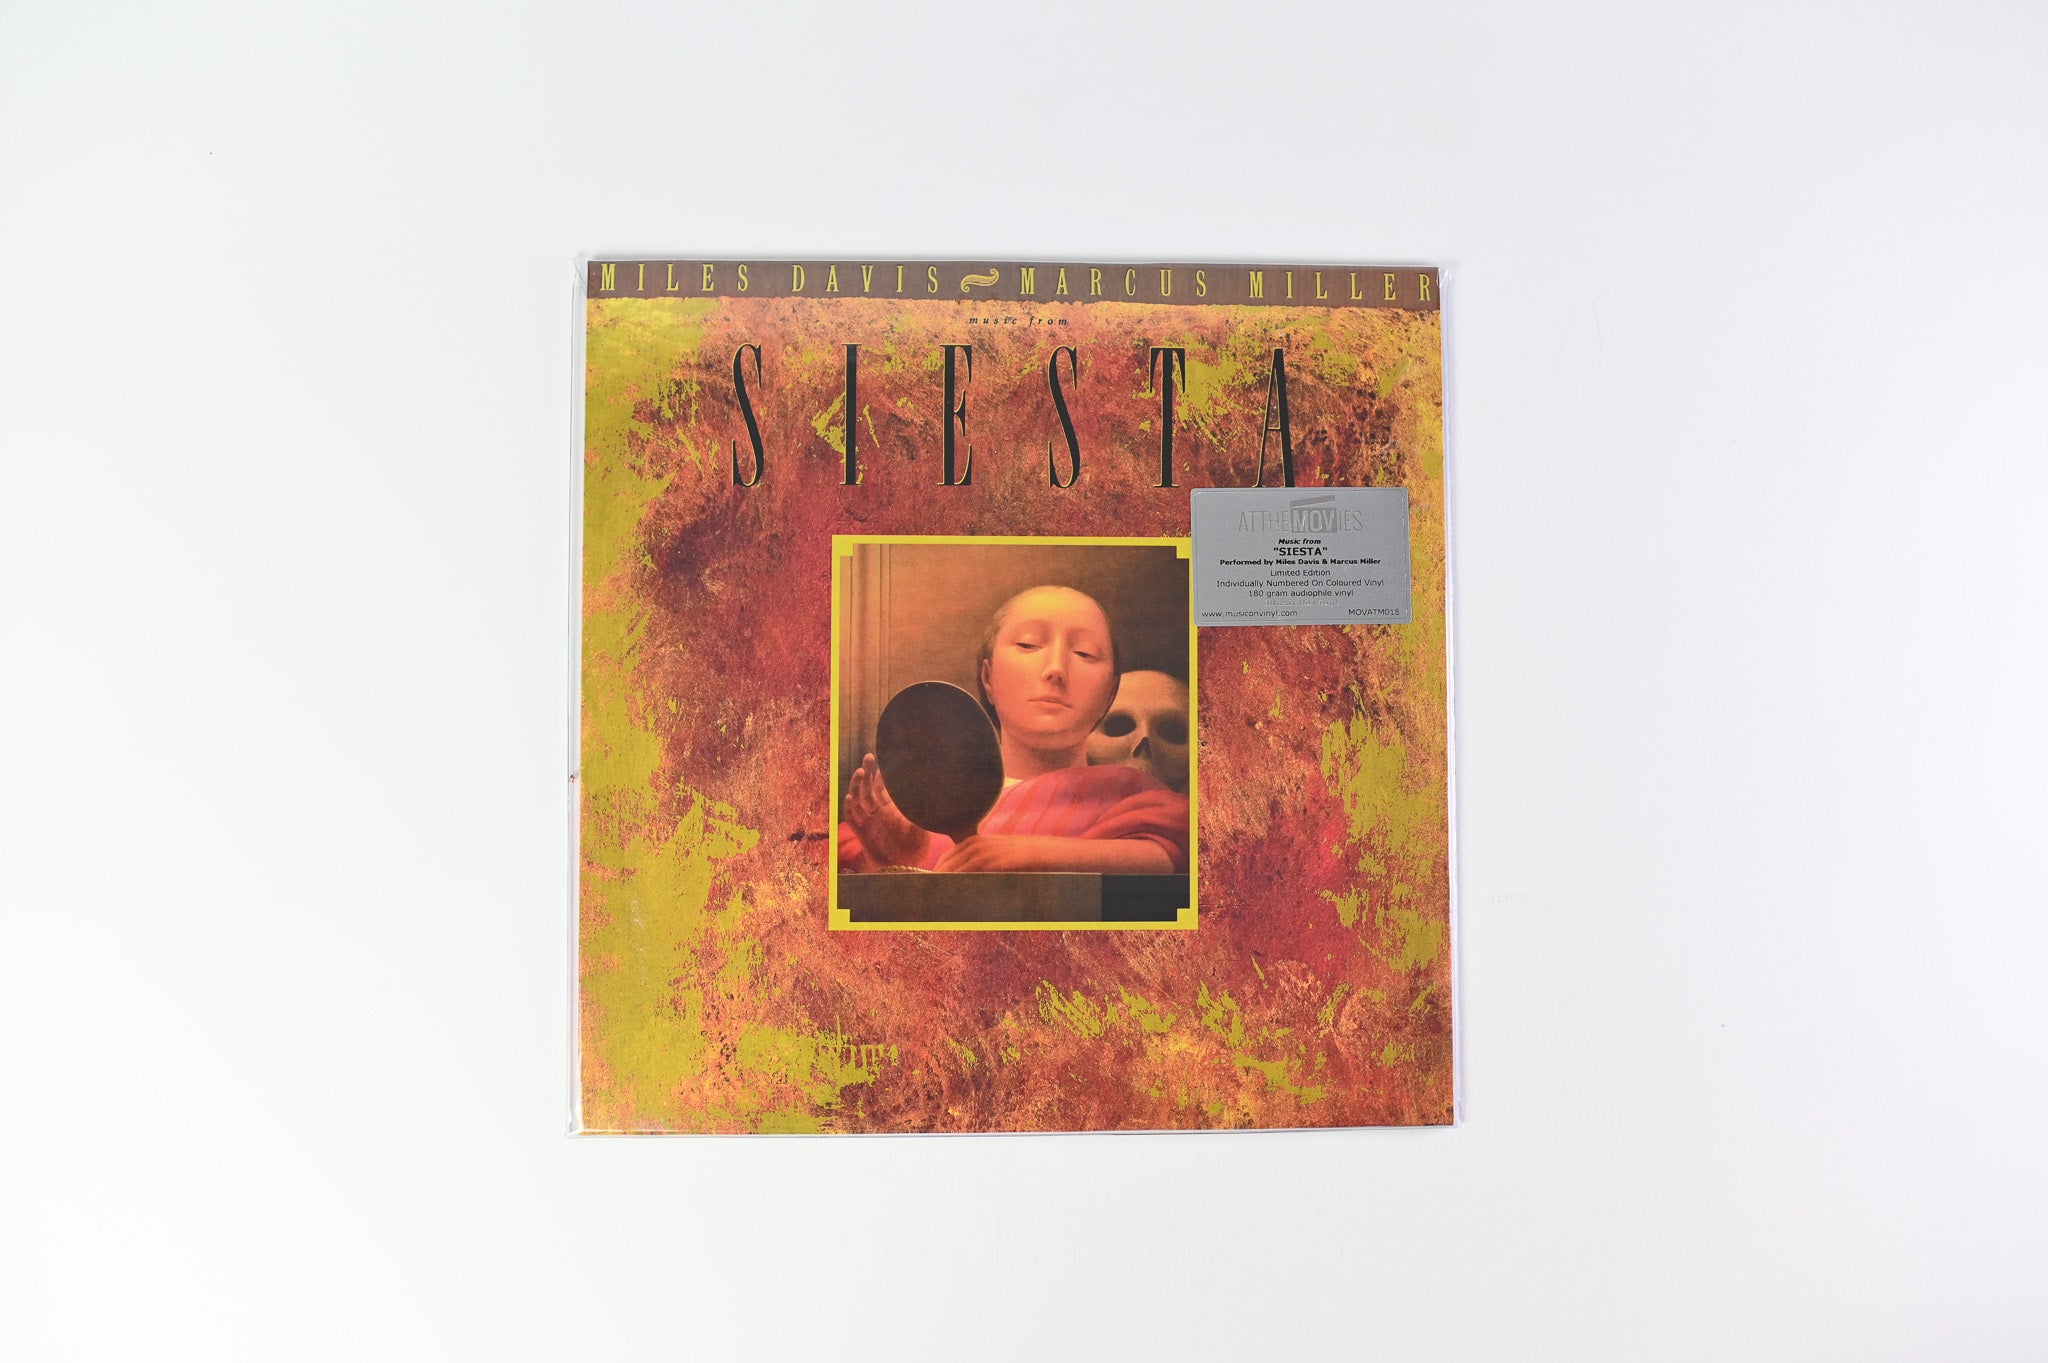 Miles Davis - Music From Siesta on Music On Vinyl on Orange Vinyl Numbered